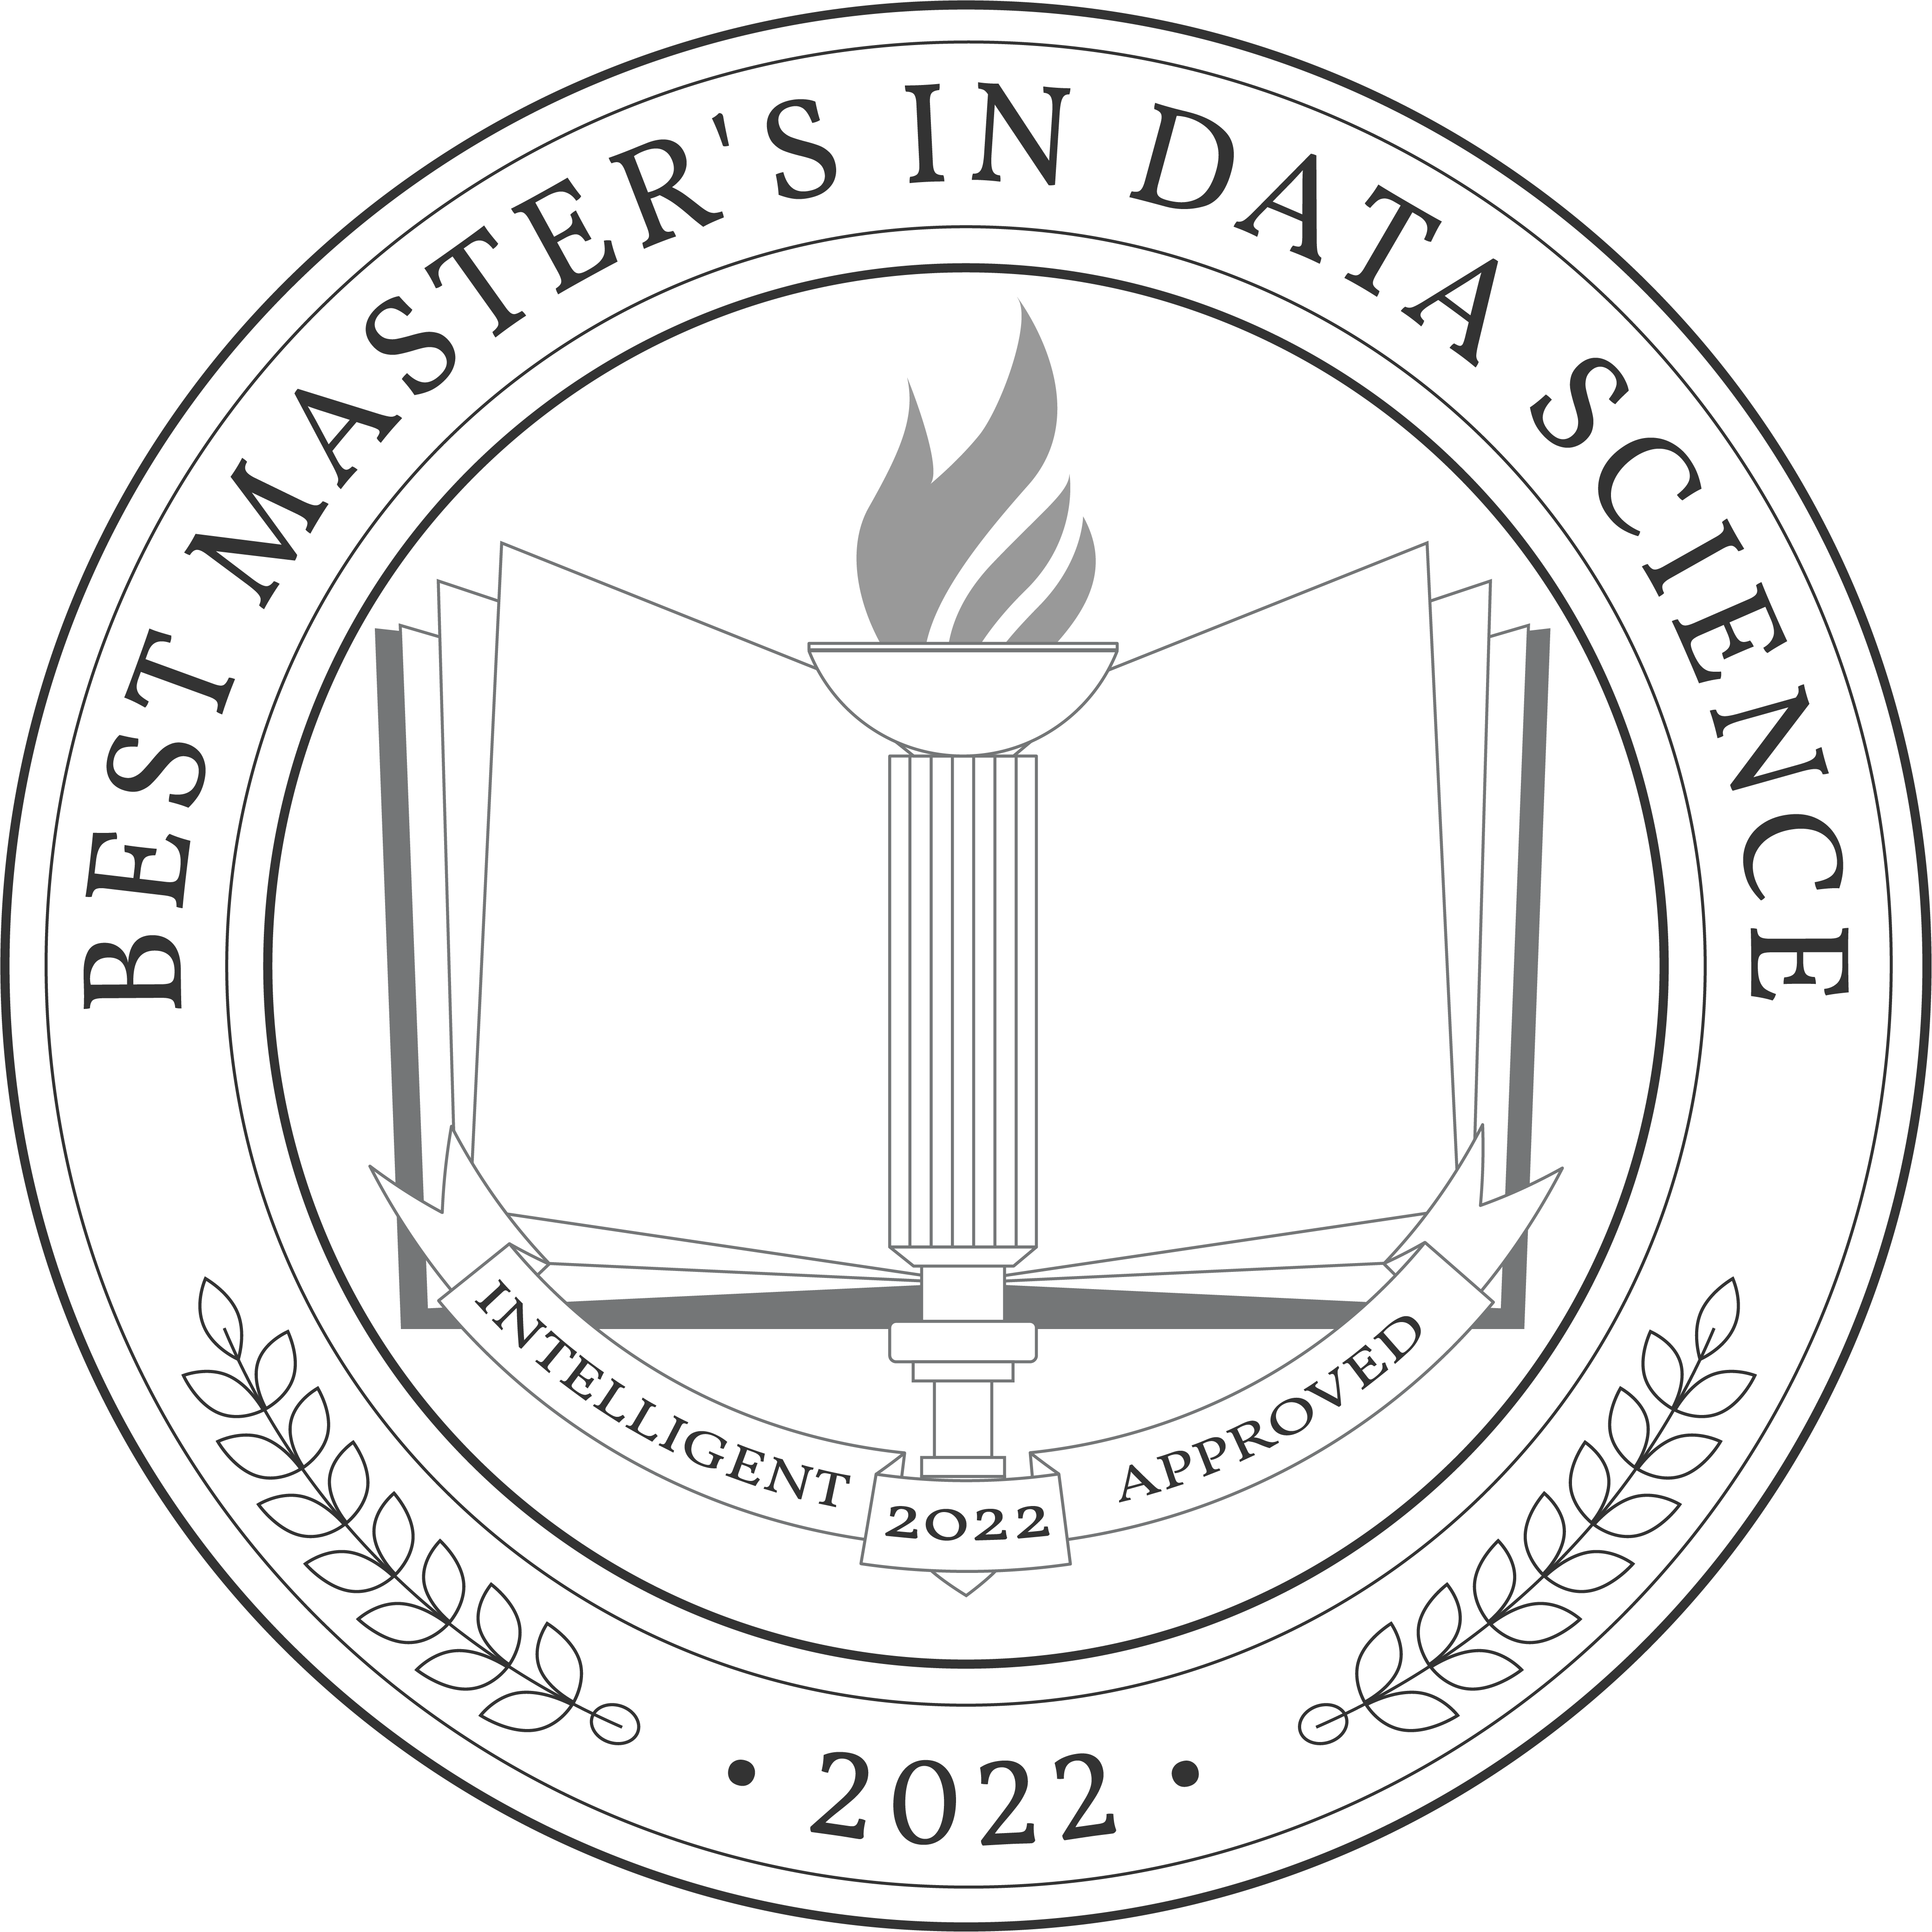 Best Master's in Data Science Badge